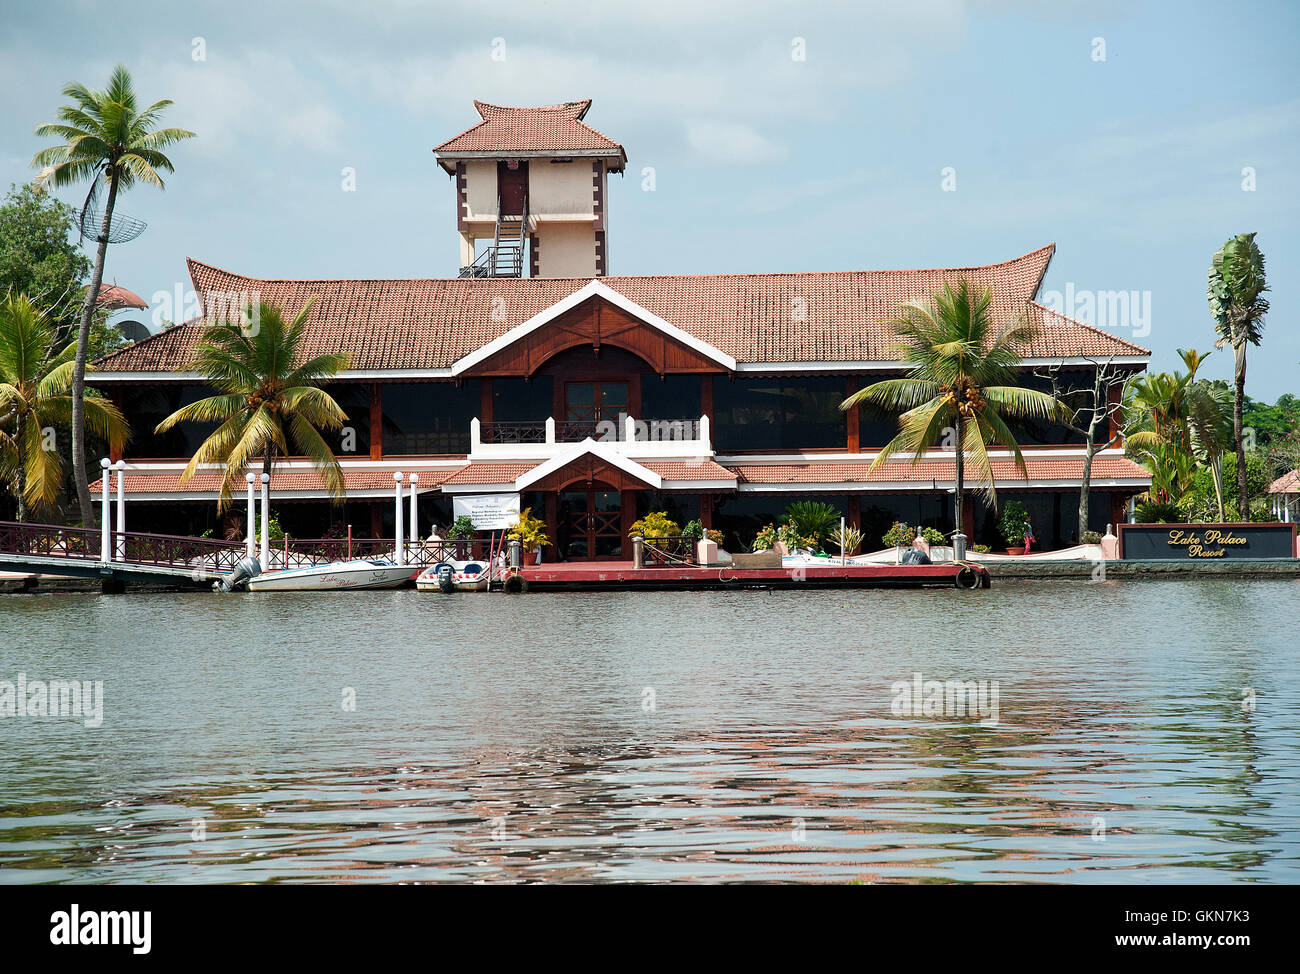 Das Bild des Lake Palace Resort in Alleapy, Kerala, Indien Stockfoto